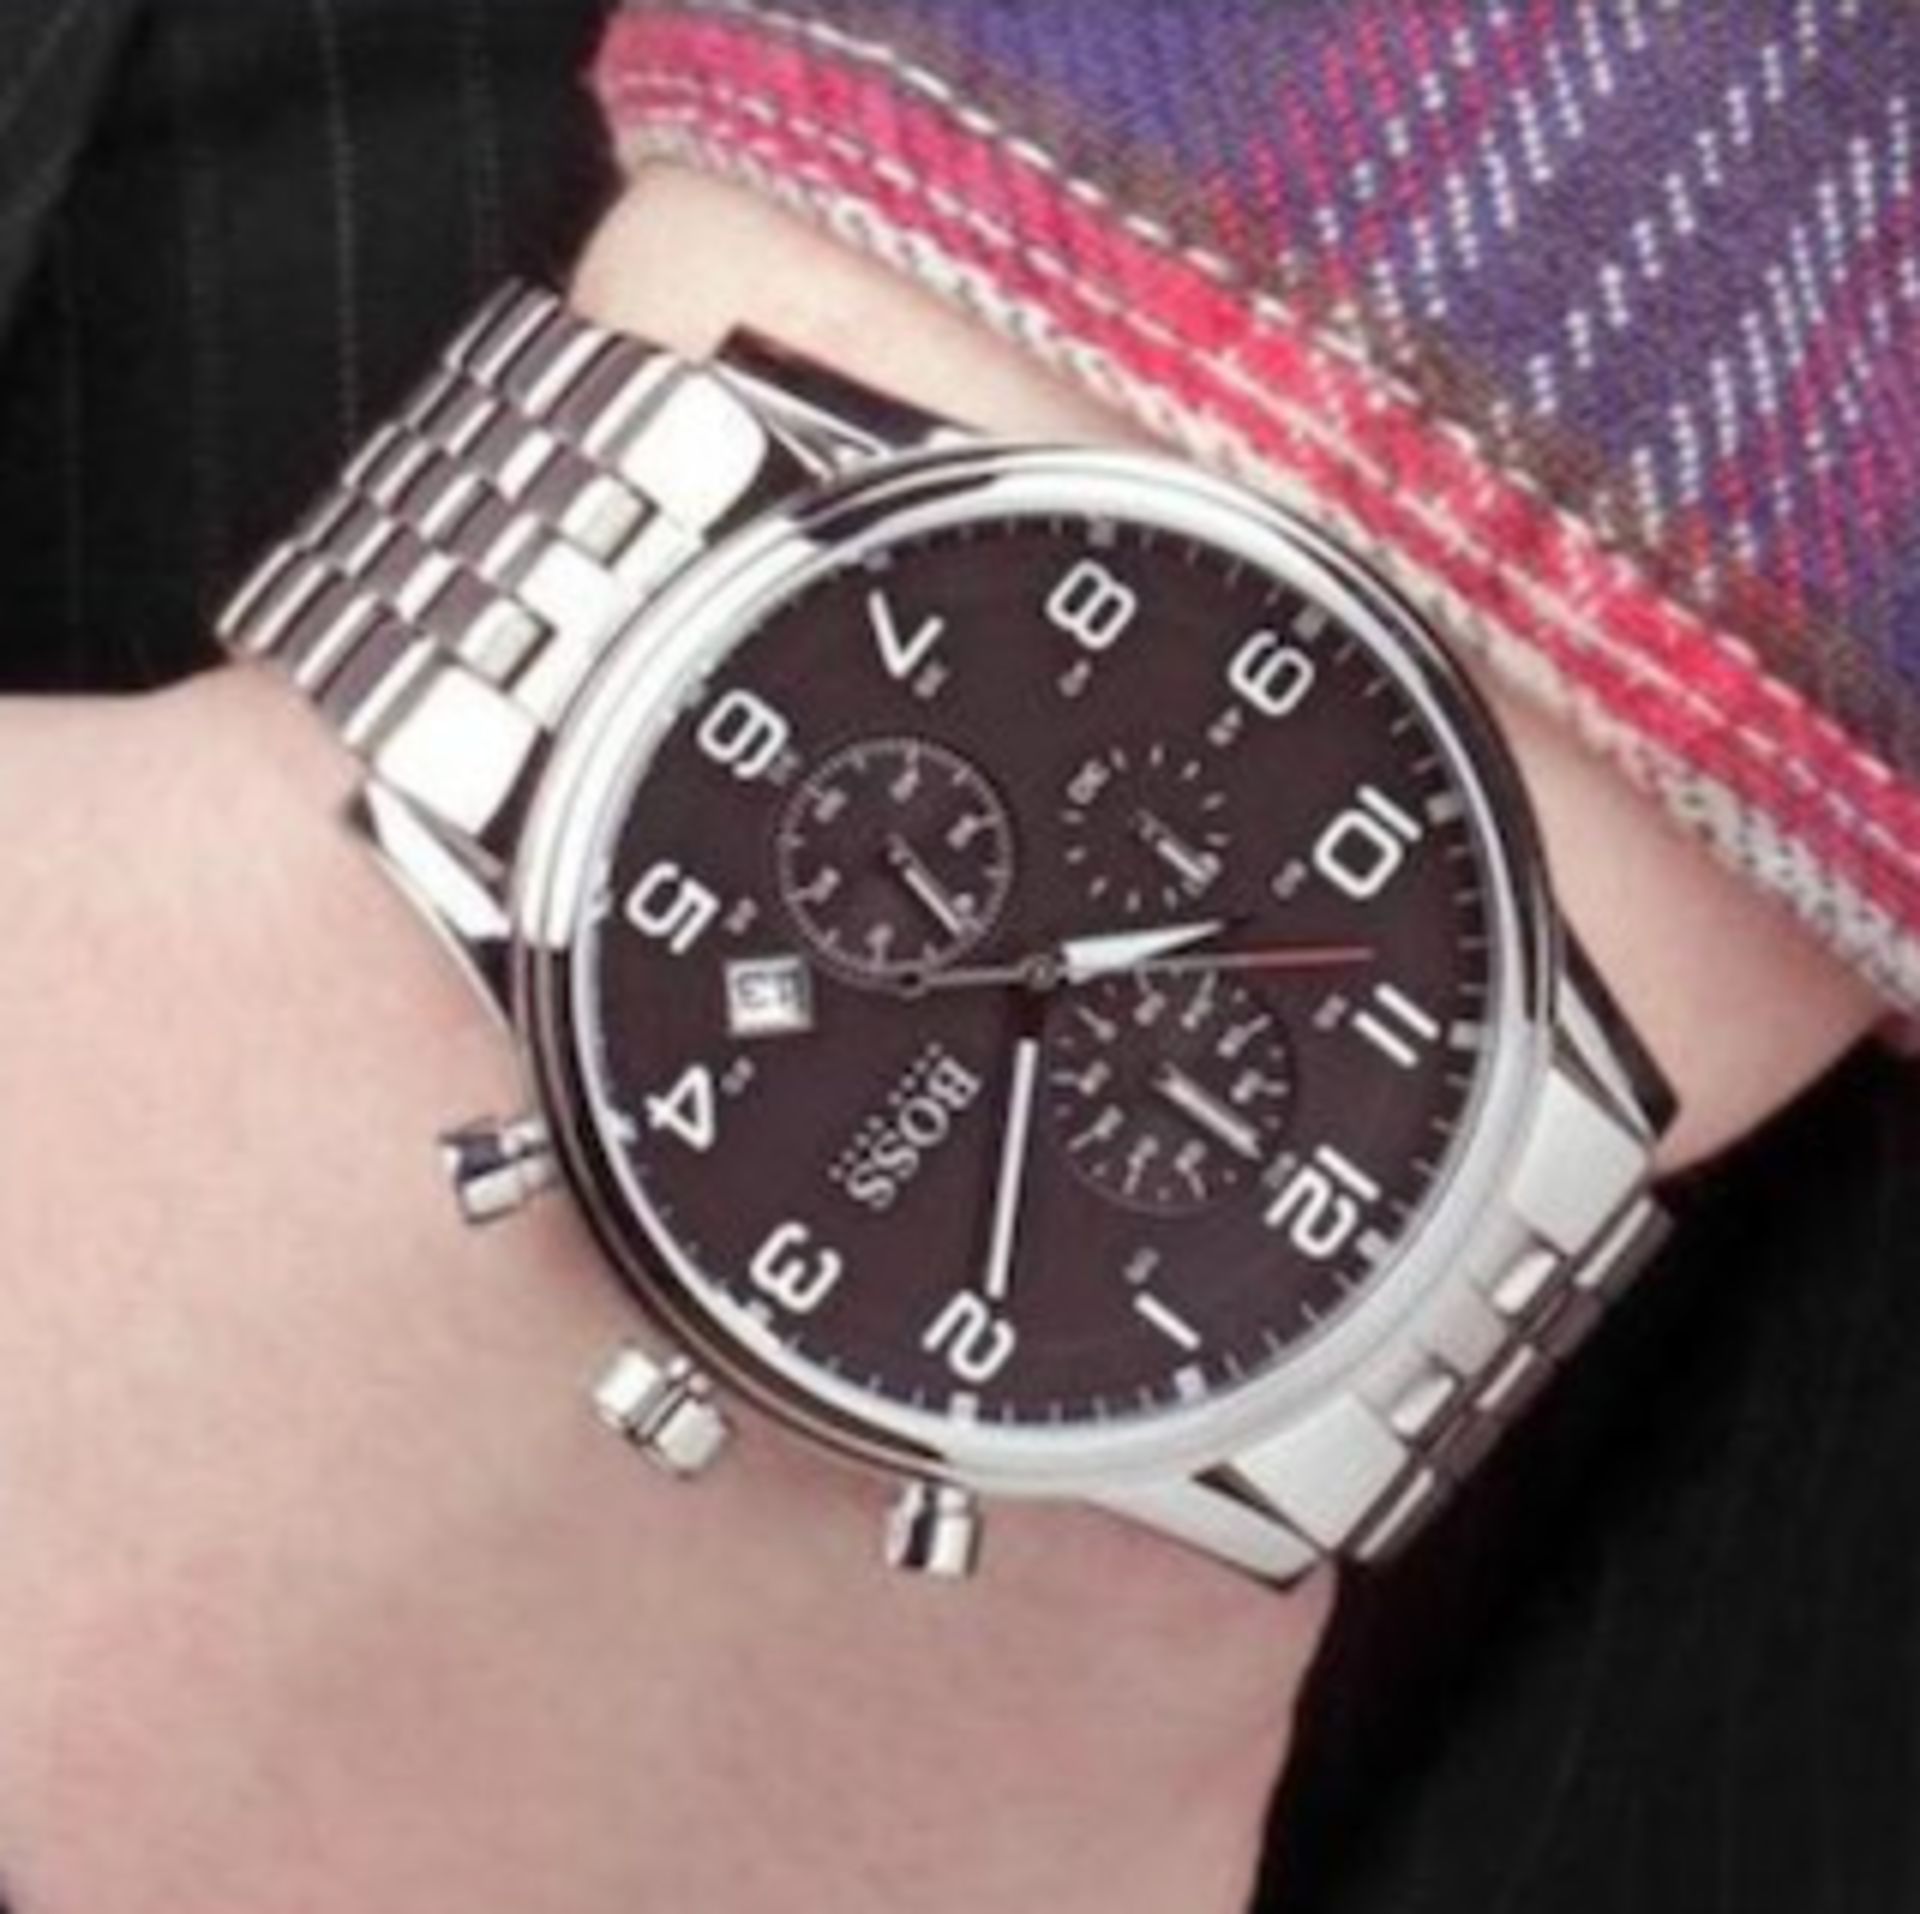 Hugo Boss 1512446 Men's Aeroliner Black Dial Silver Bracelet Chronograph Watch - Image 3 of 6